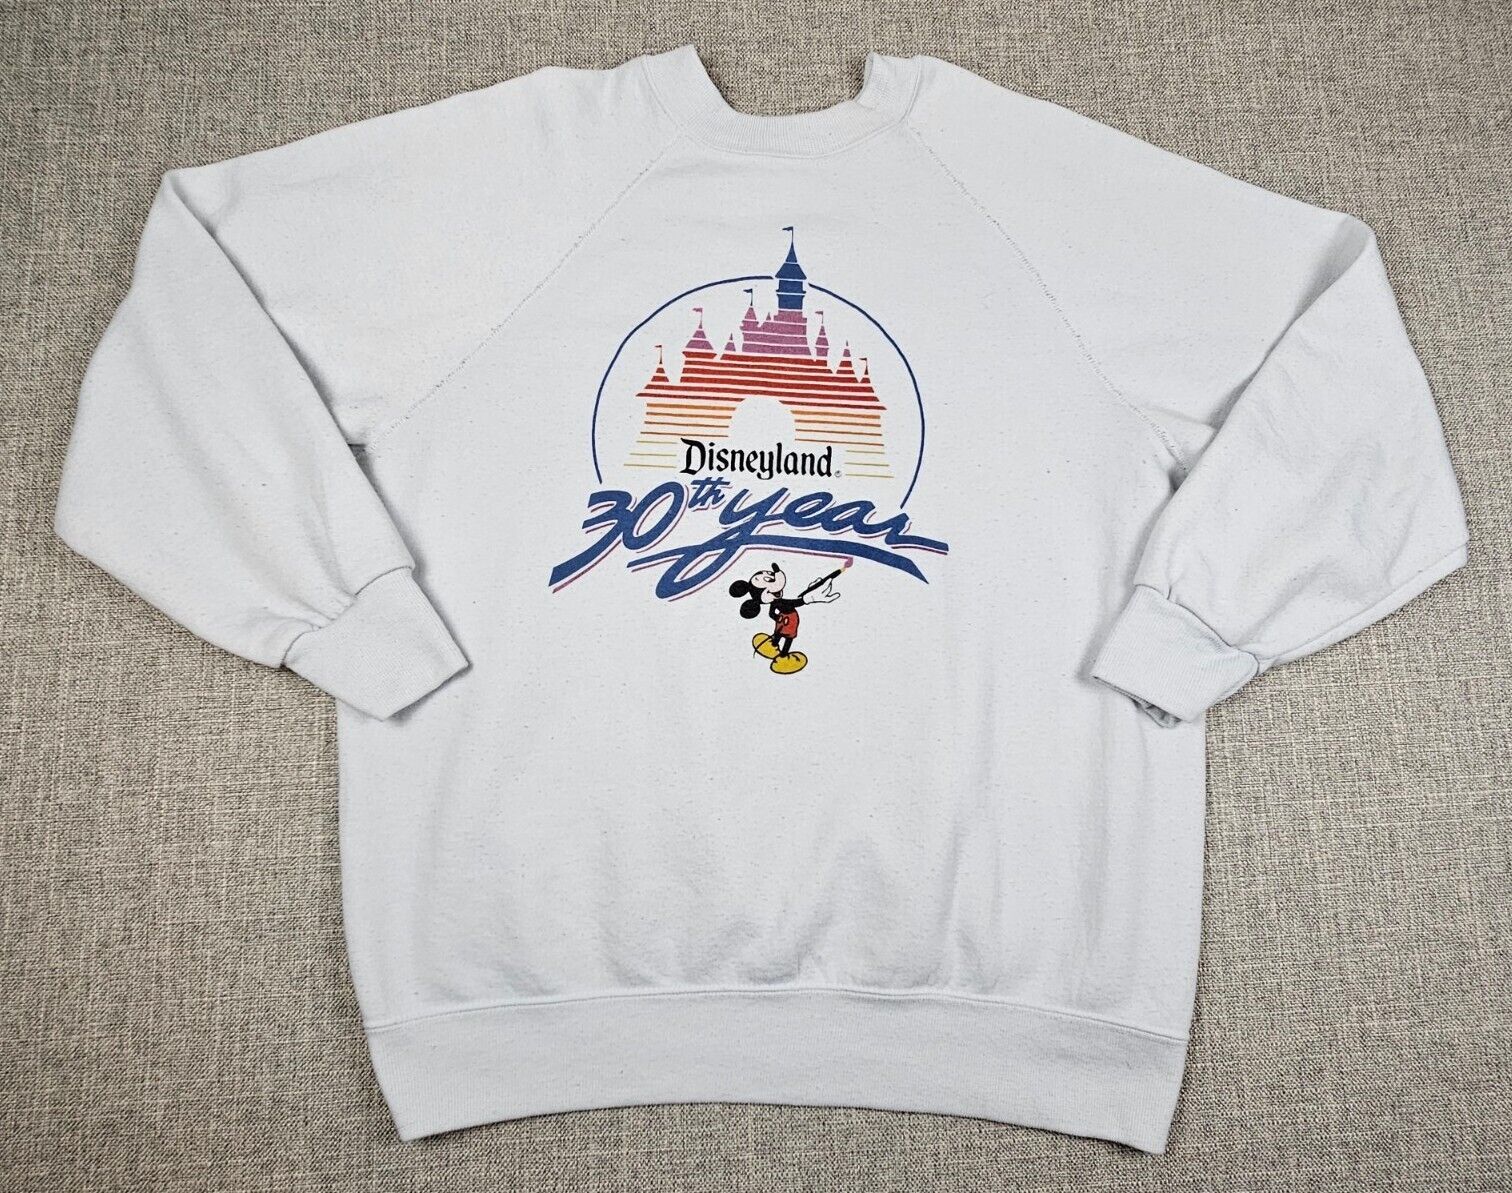 Vintage Disneyland Sweater Adult Large 30th Year 1985 80s Graphic Sweatshirt USA